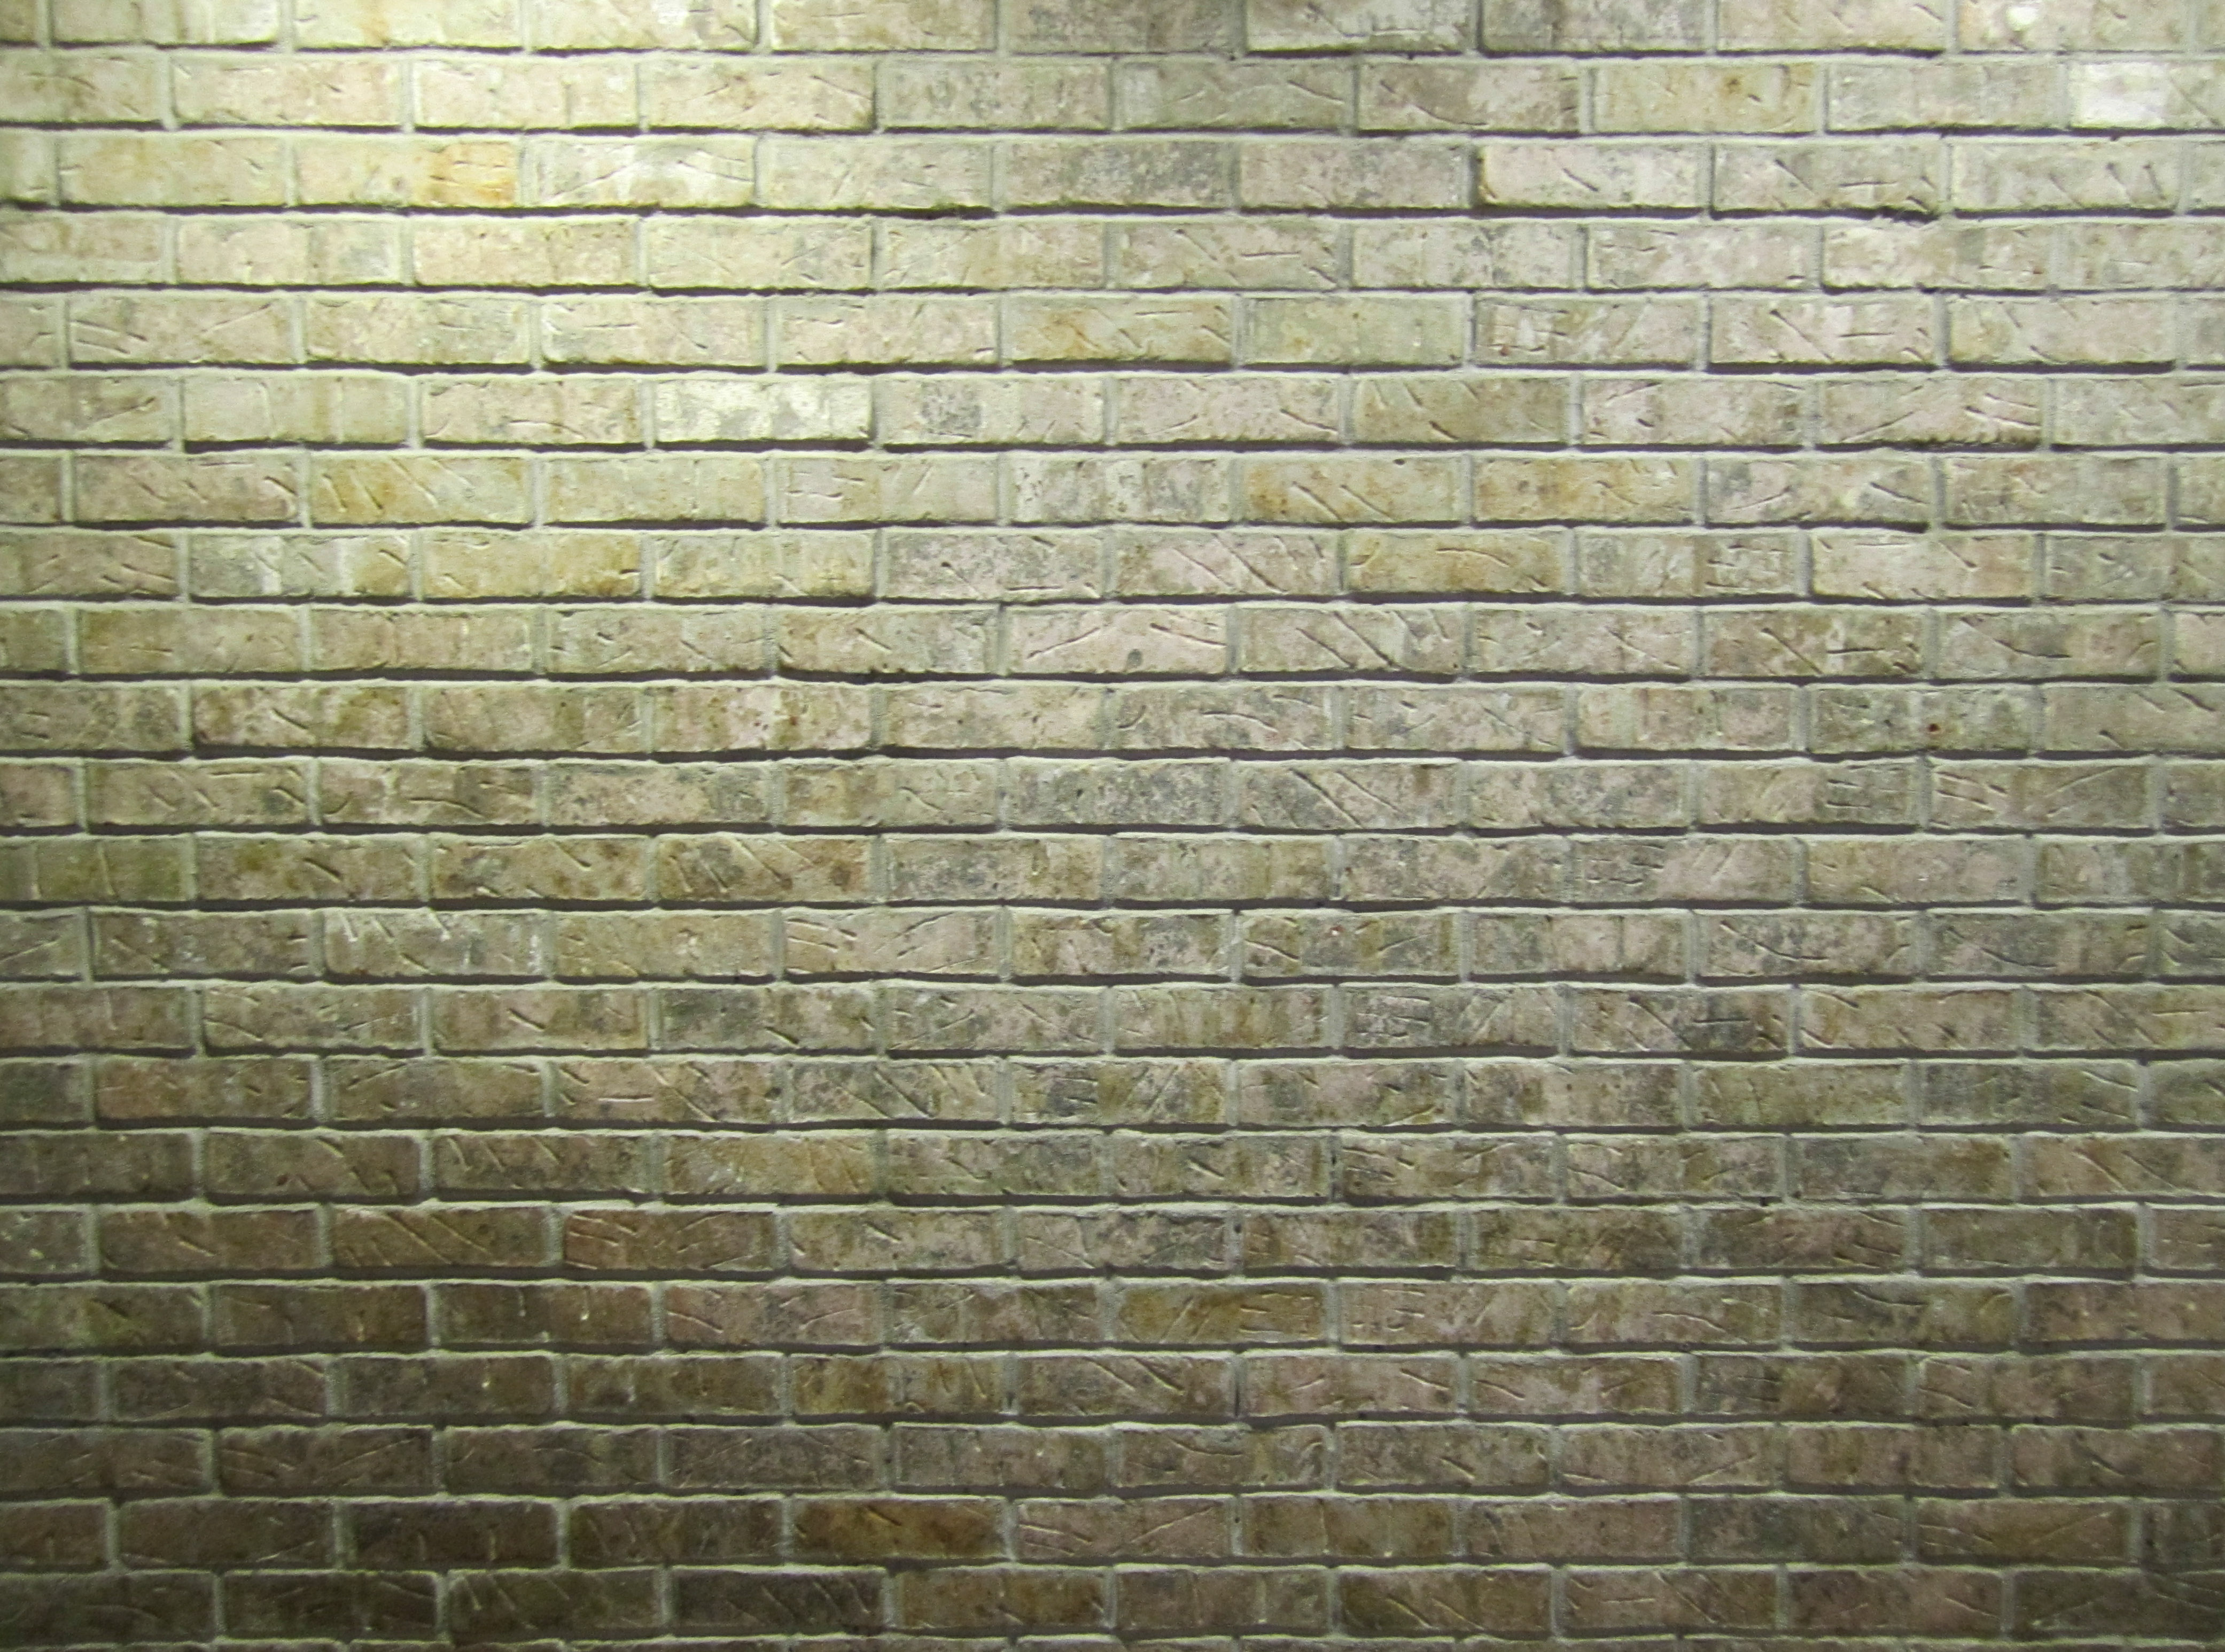 brick texture wallpaper urban grunge tile stock photo - TextureX ...